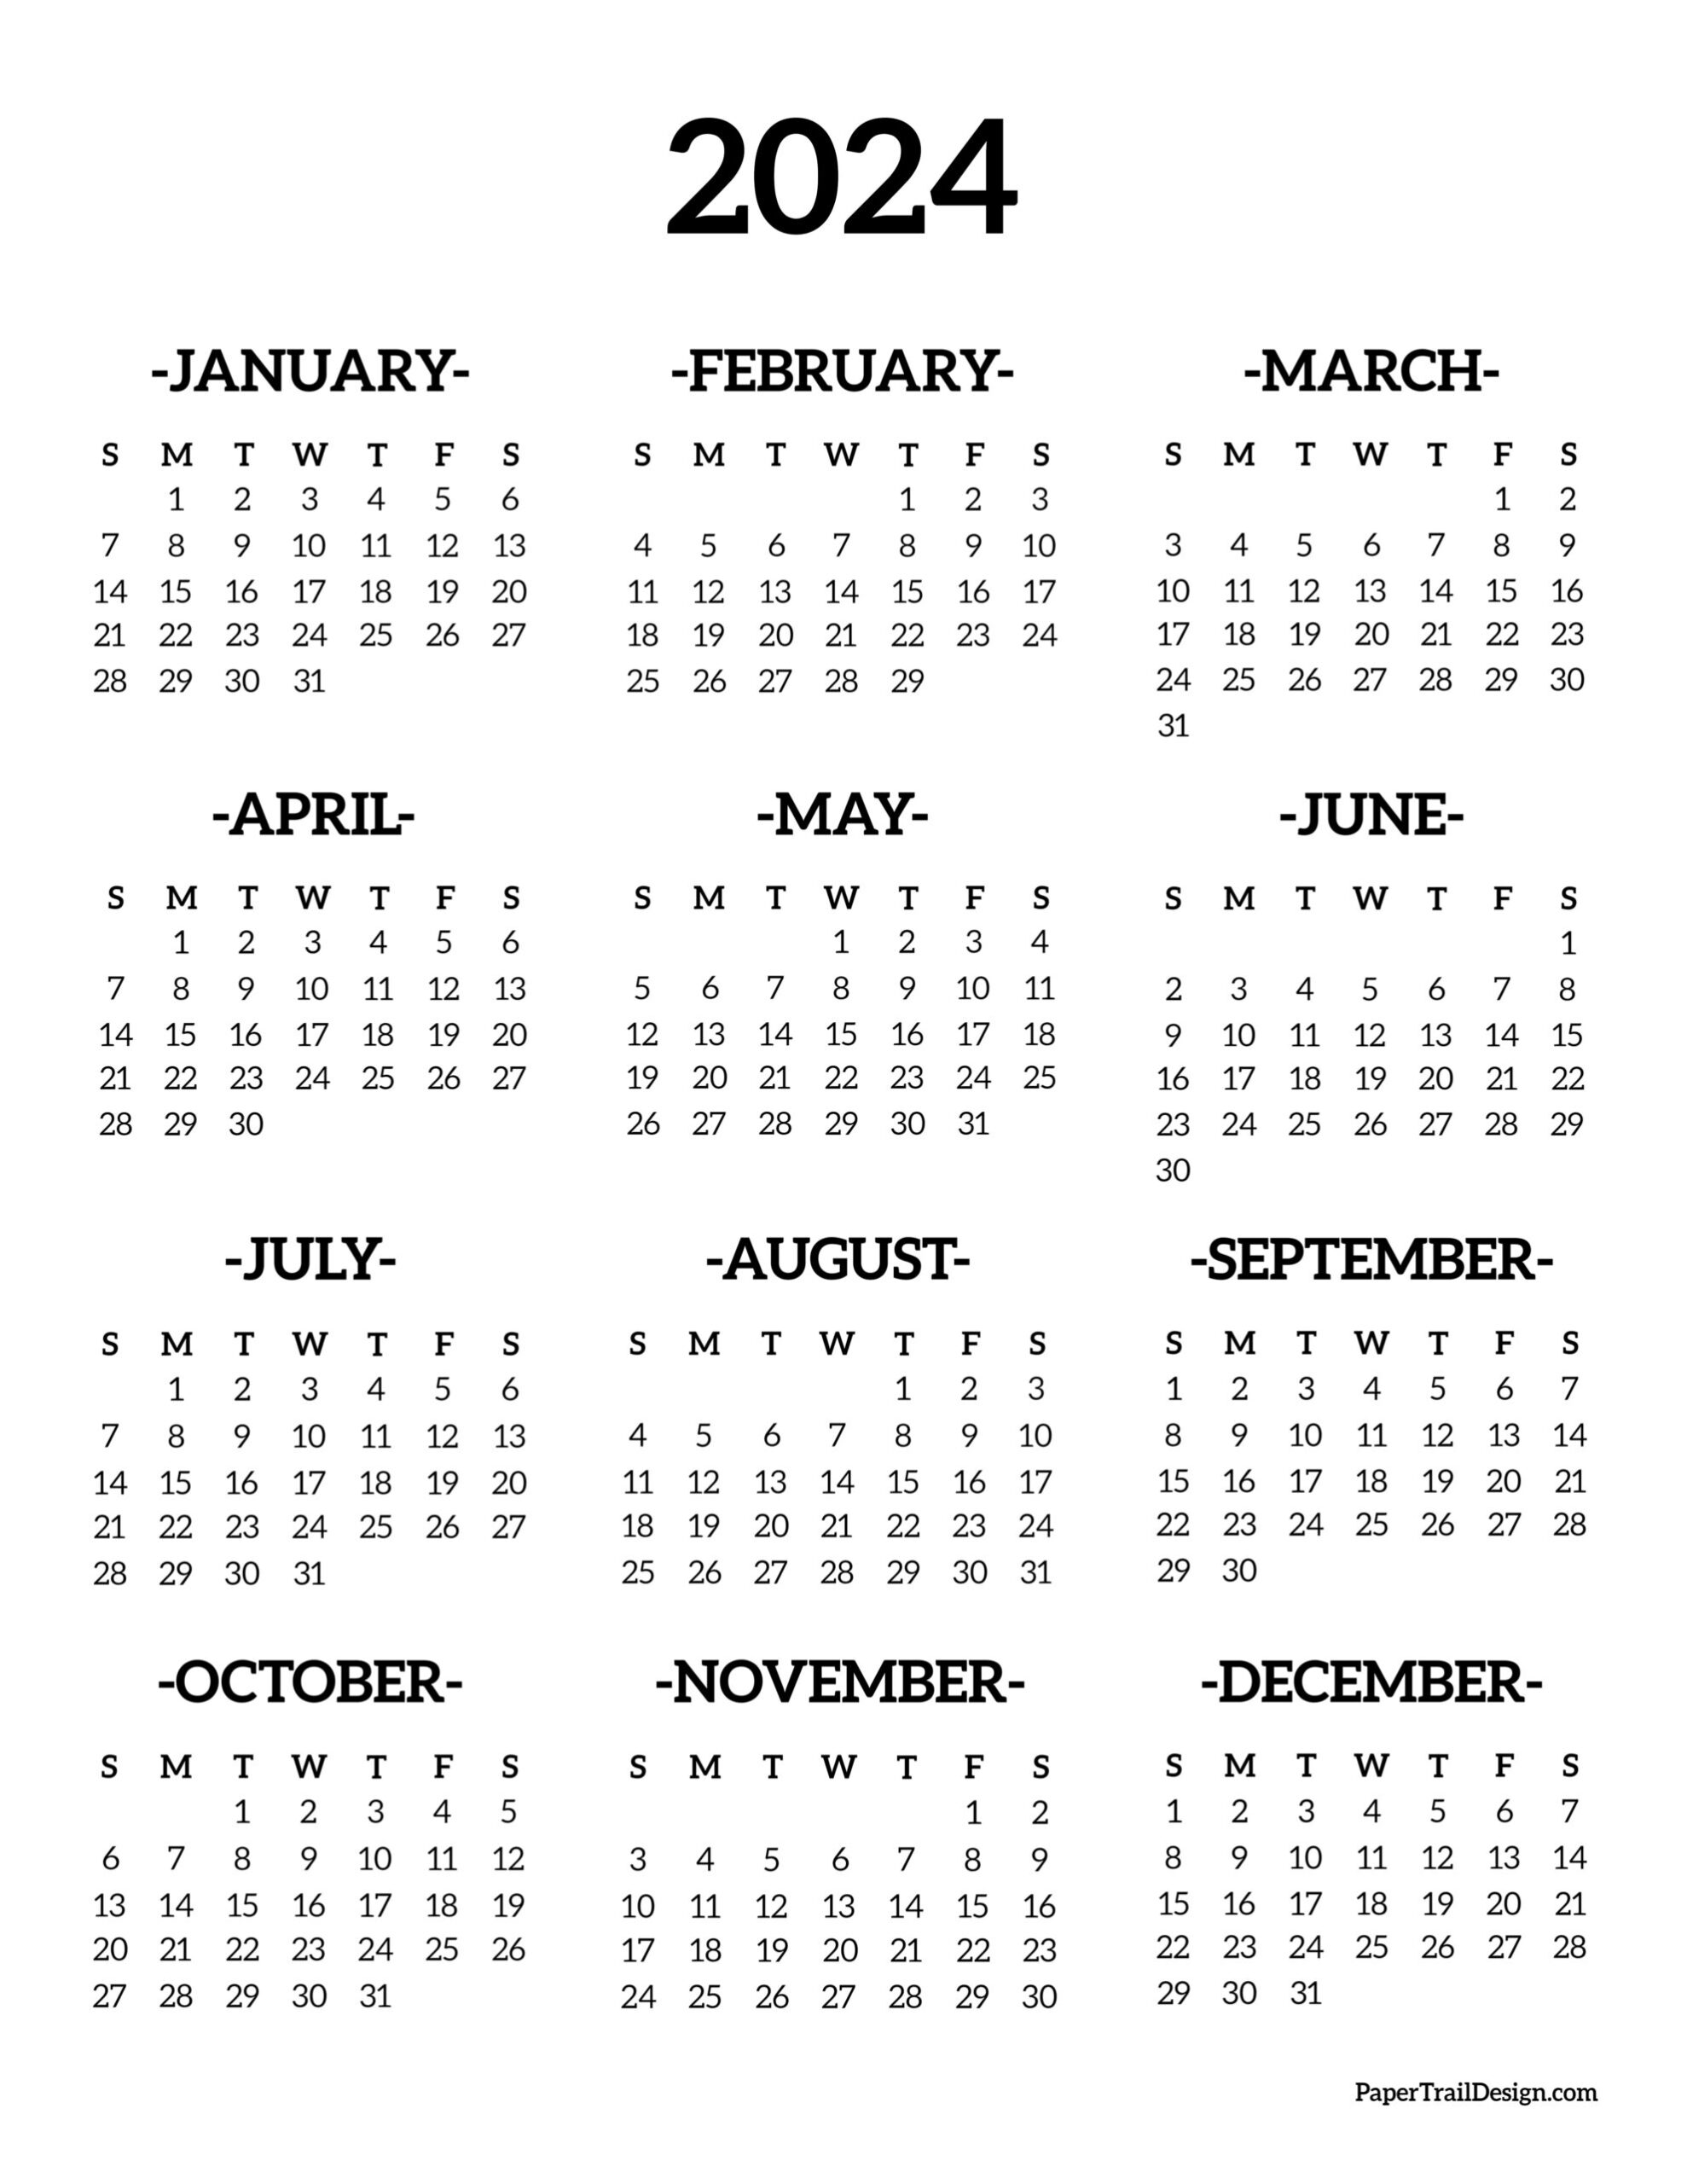 Calendar 2024 Printable One Page - Paper Trail Design for 2024 Printable Calendar Free